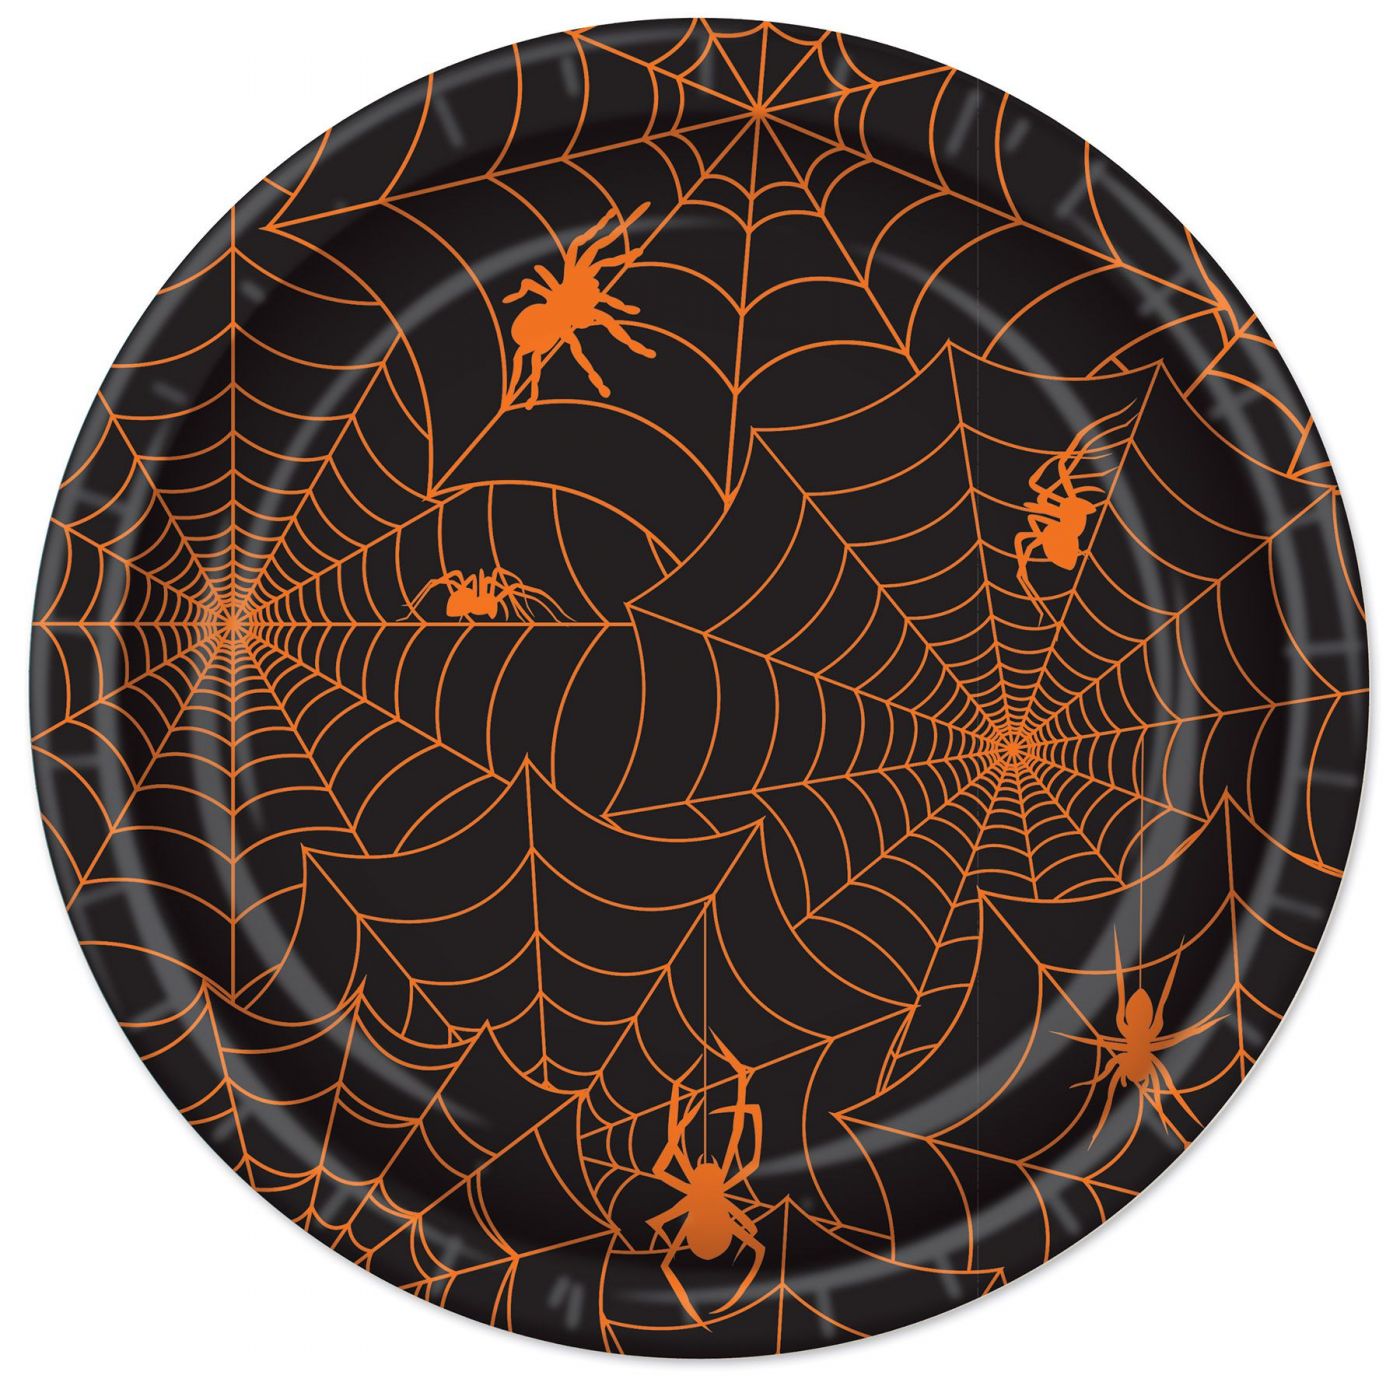 Spider Web Plates (12) image